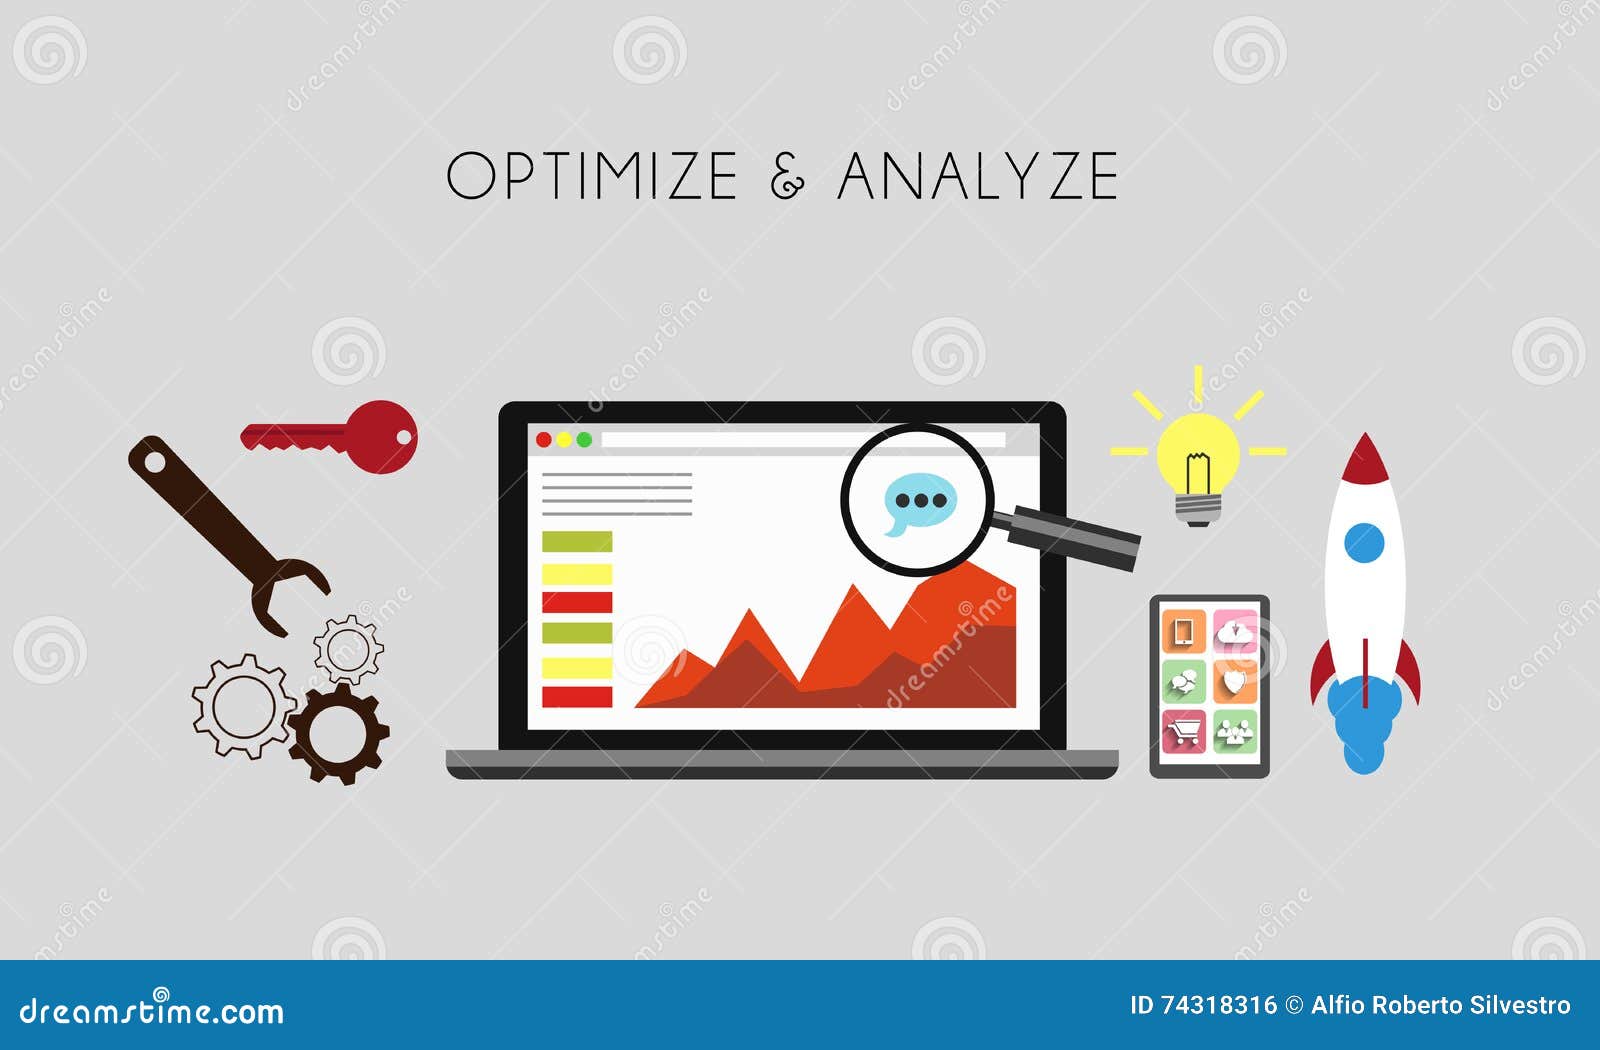 optimize and analyze